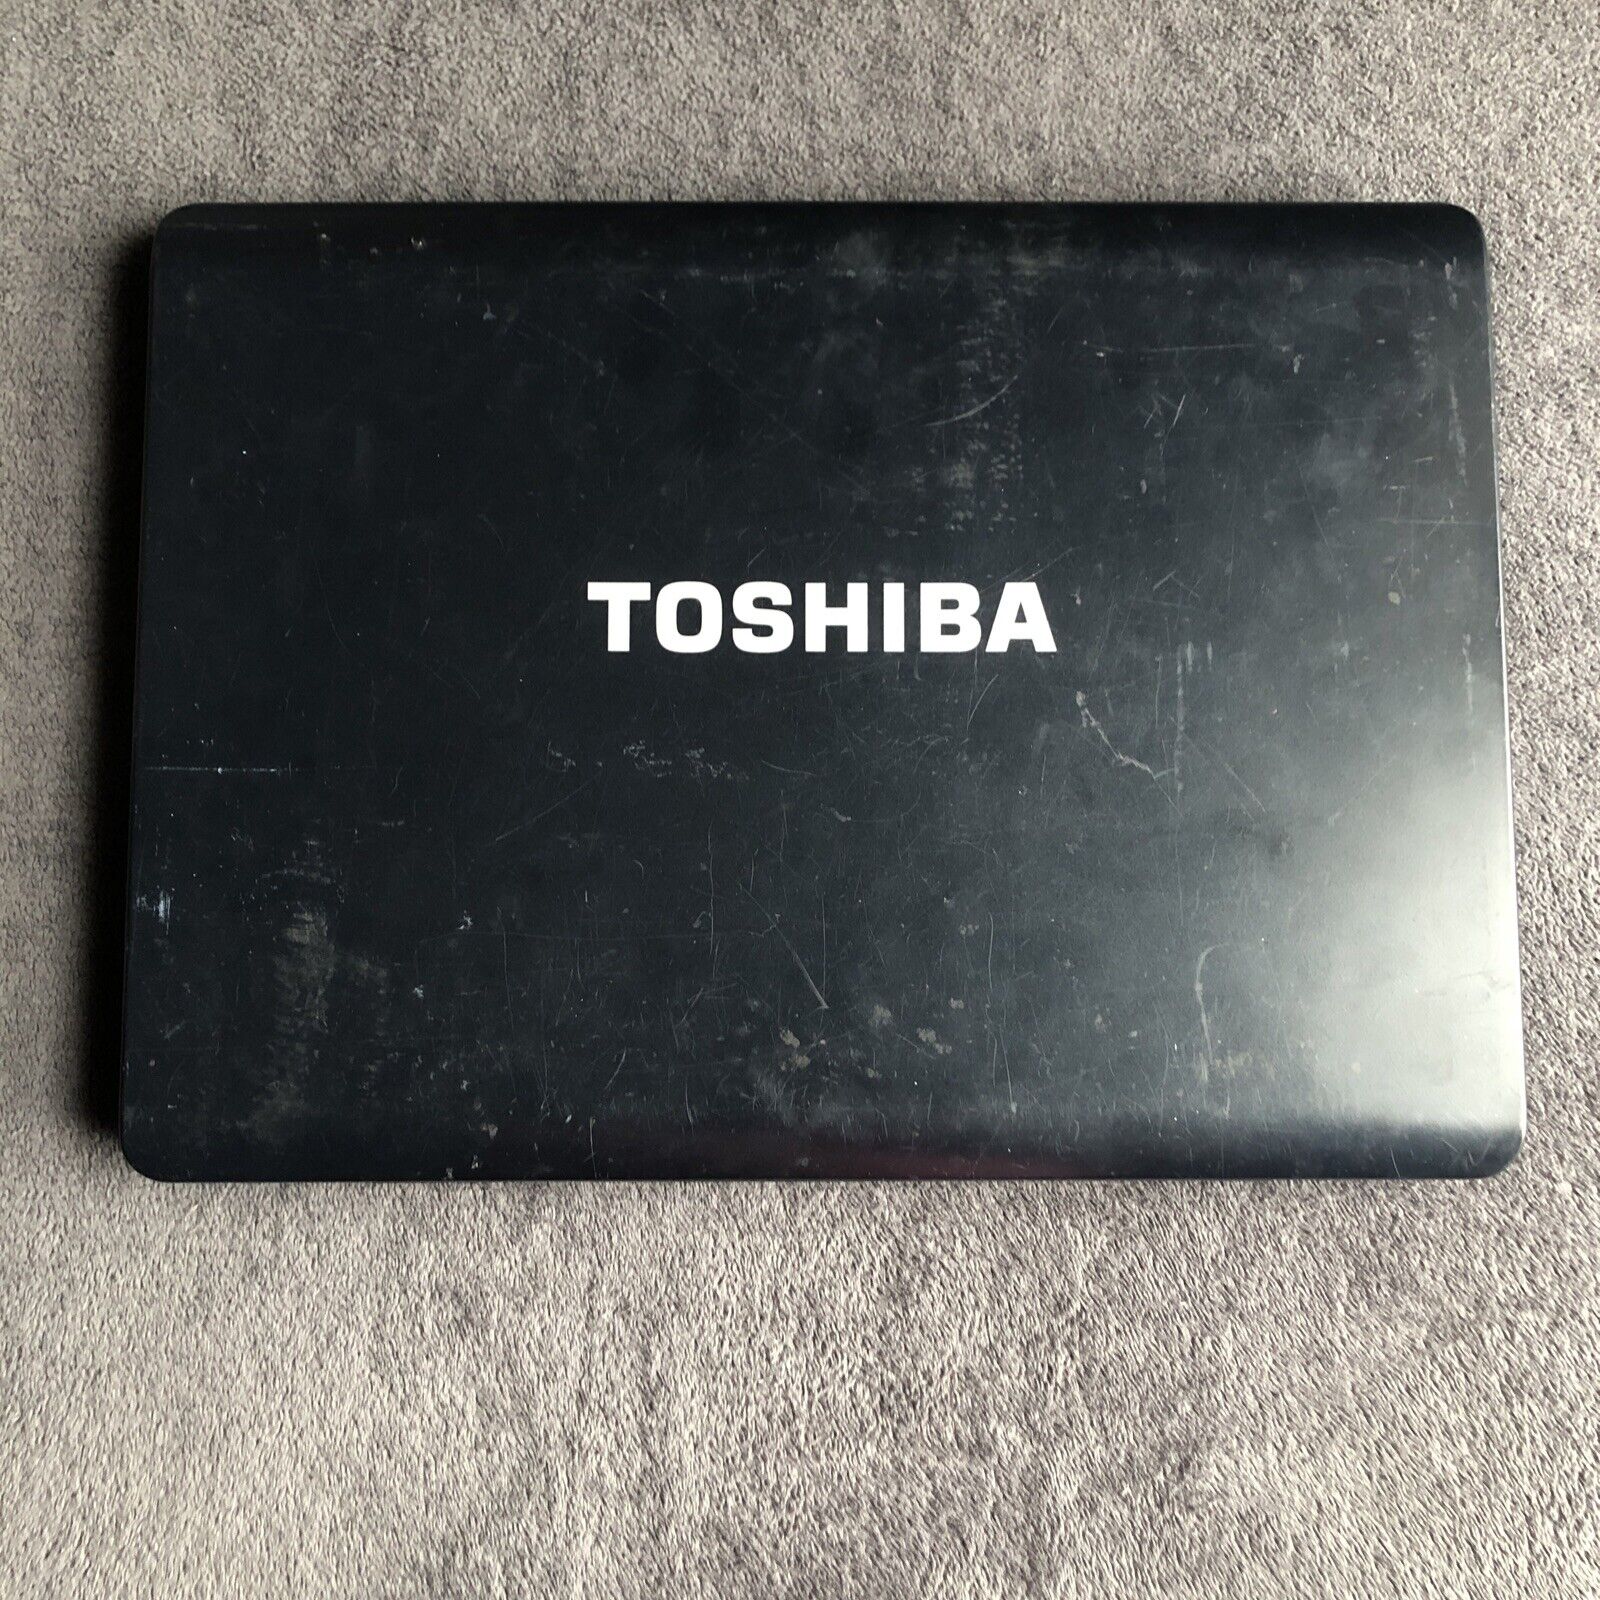 Toshiba Satellite A205-S5804 Vintage Laptop 100GB HHD+ 3GB RAM - NO POWER